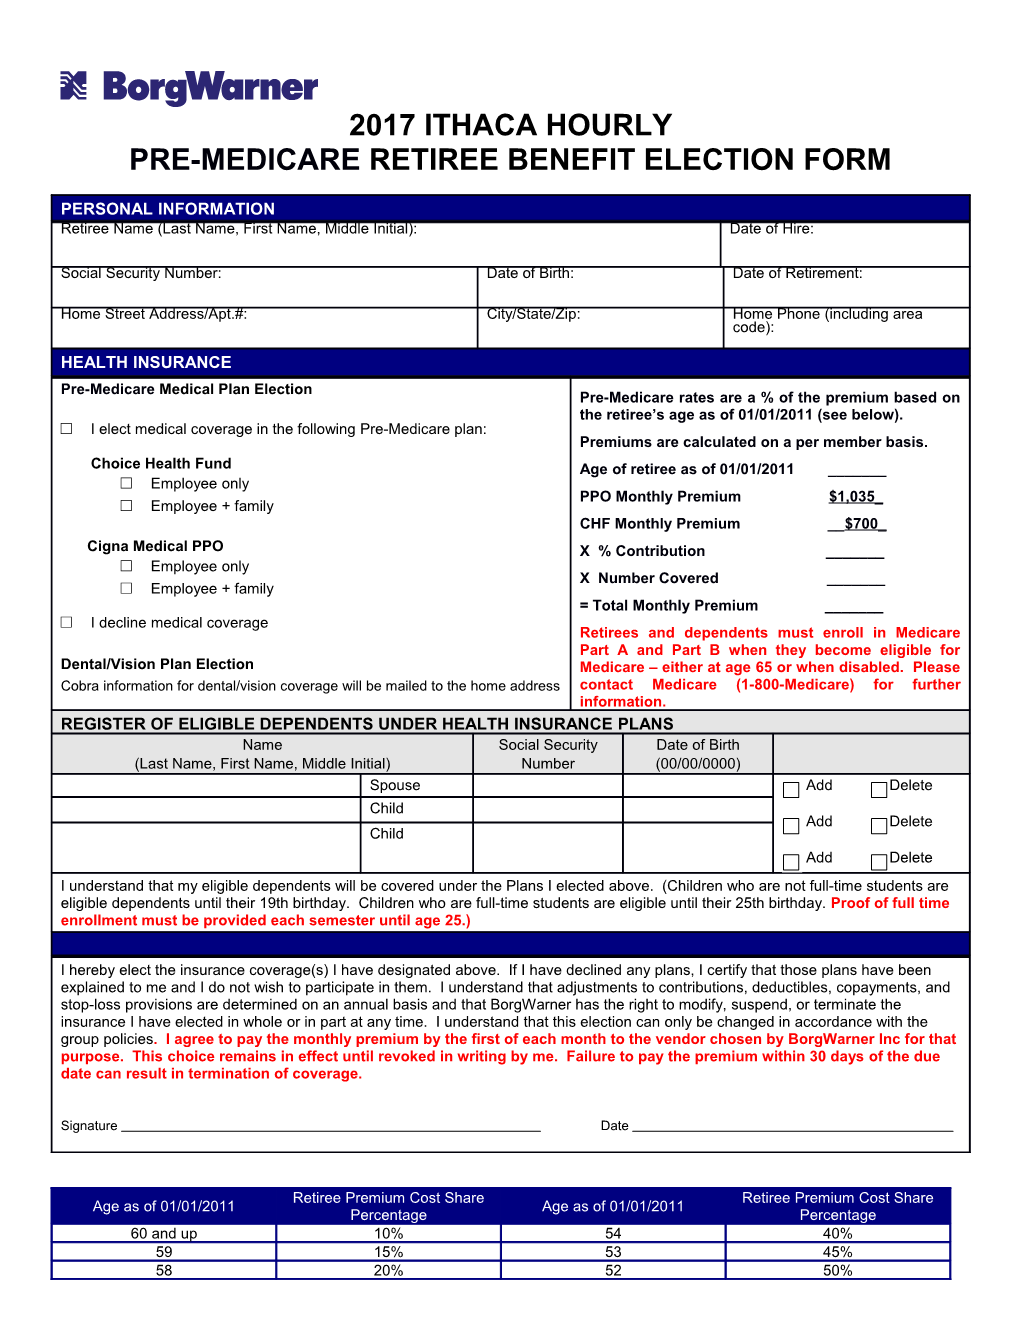 Pre-Medicare Retiree Benefit Election Form